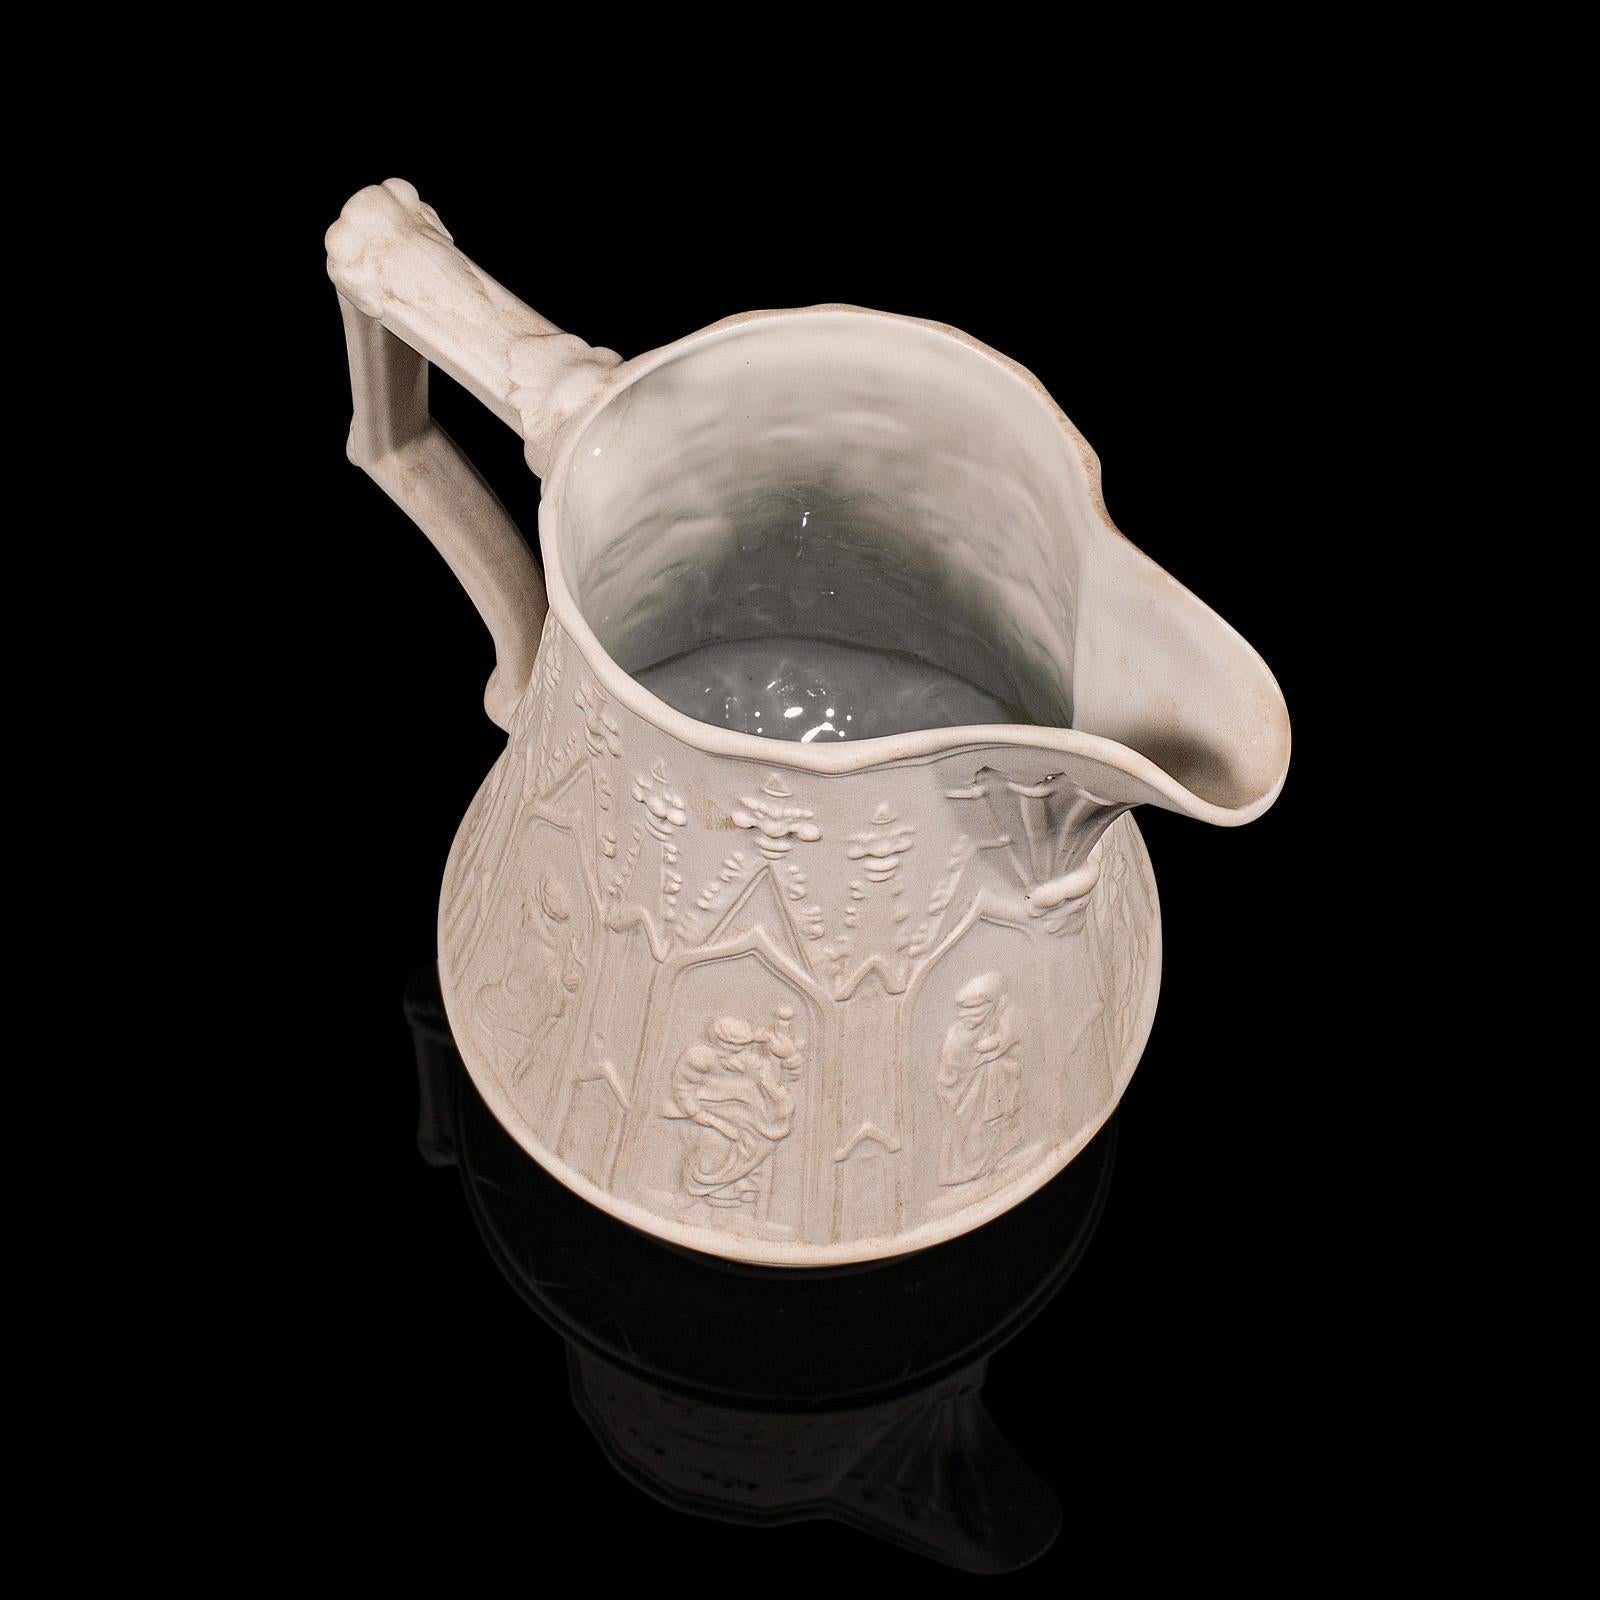 Vintage Pouring Jug, English, Parian Ware Ceramic, Serving Creamer, Decorative For Sale 1